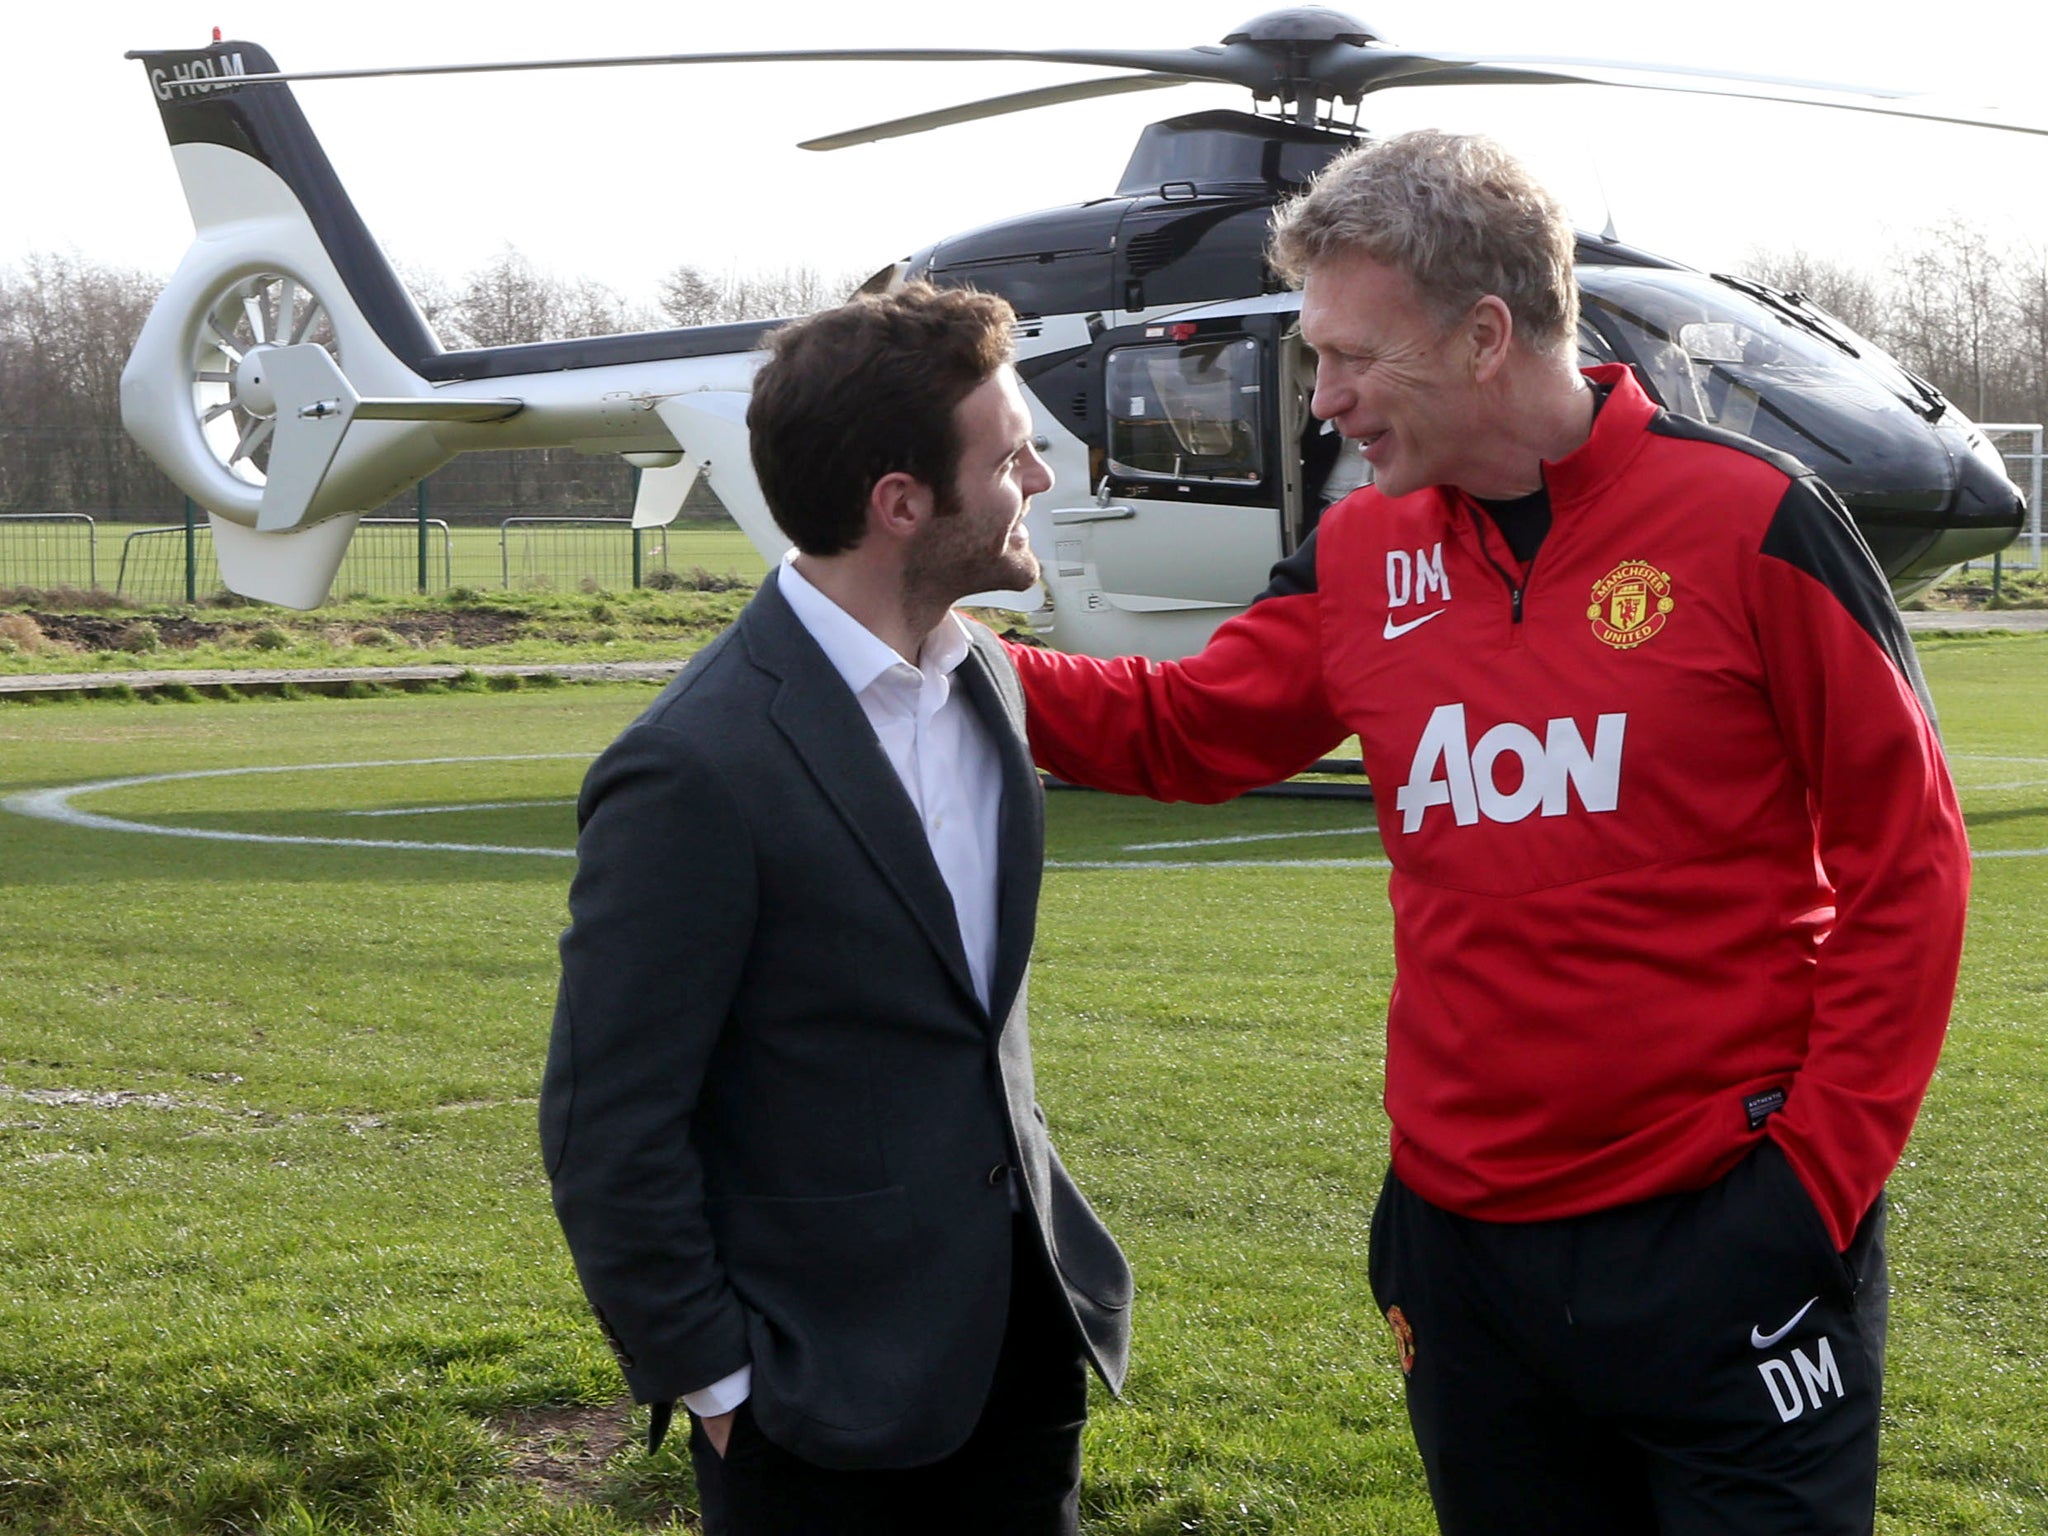 David Moyes greets Juan Mata ahead of his proposed £37m transfer from Chelsea